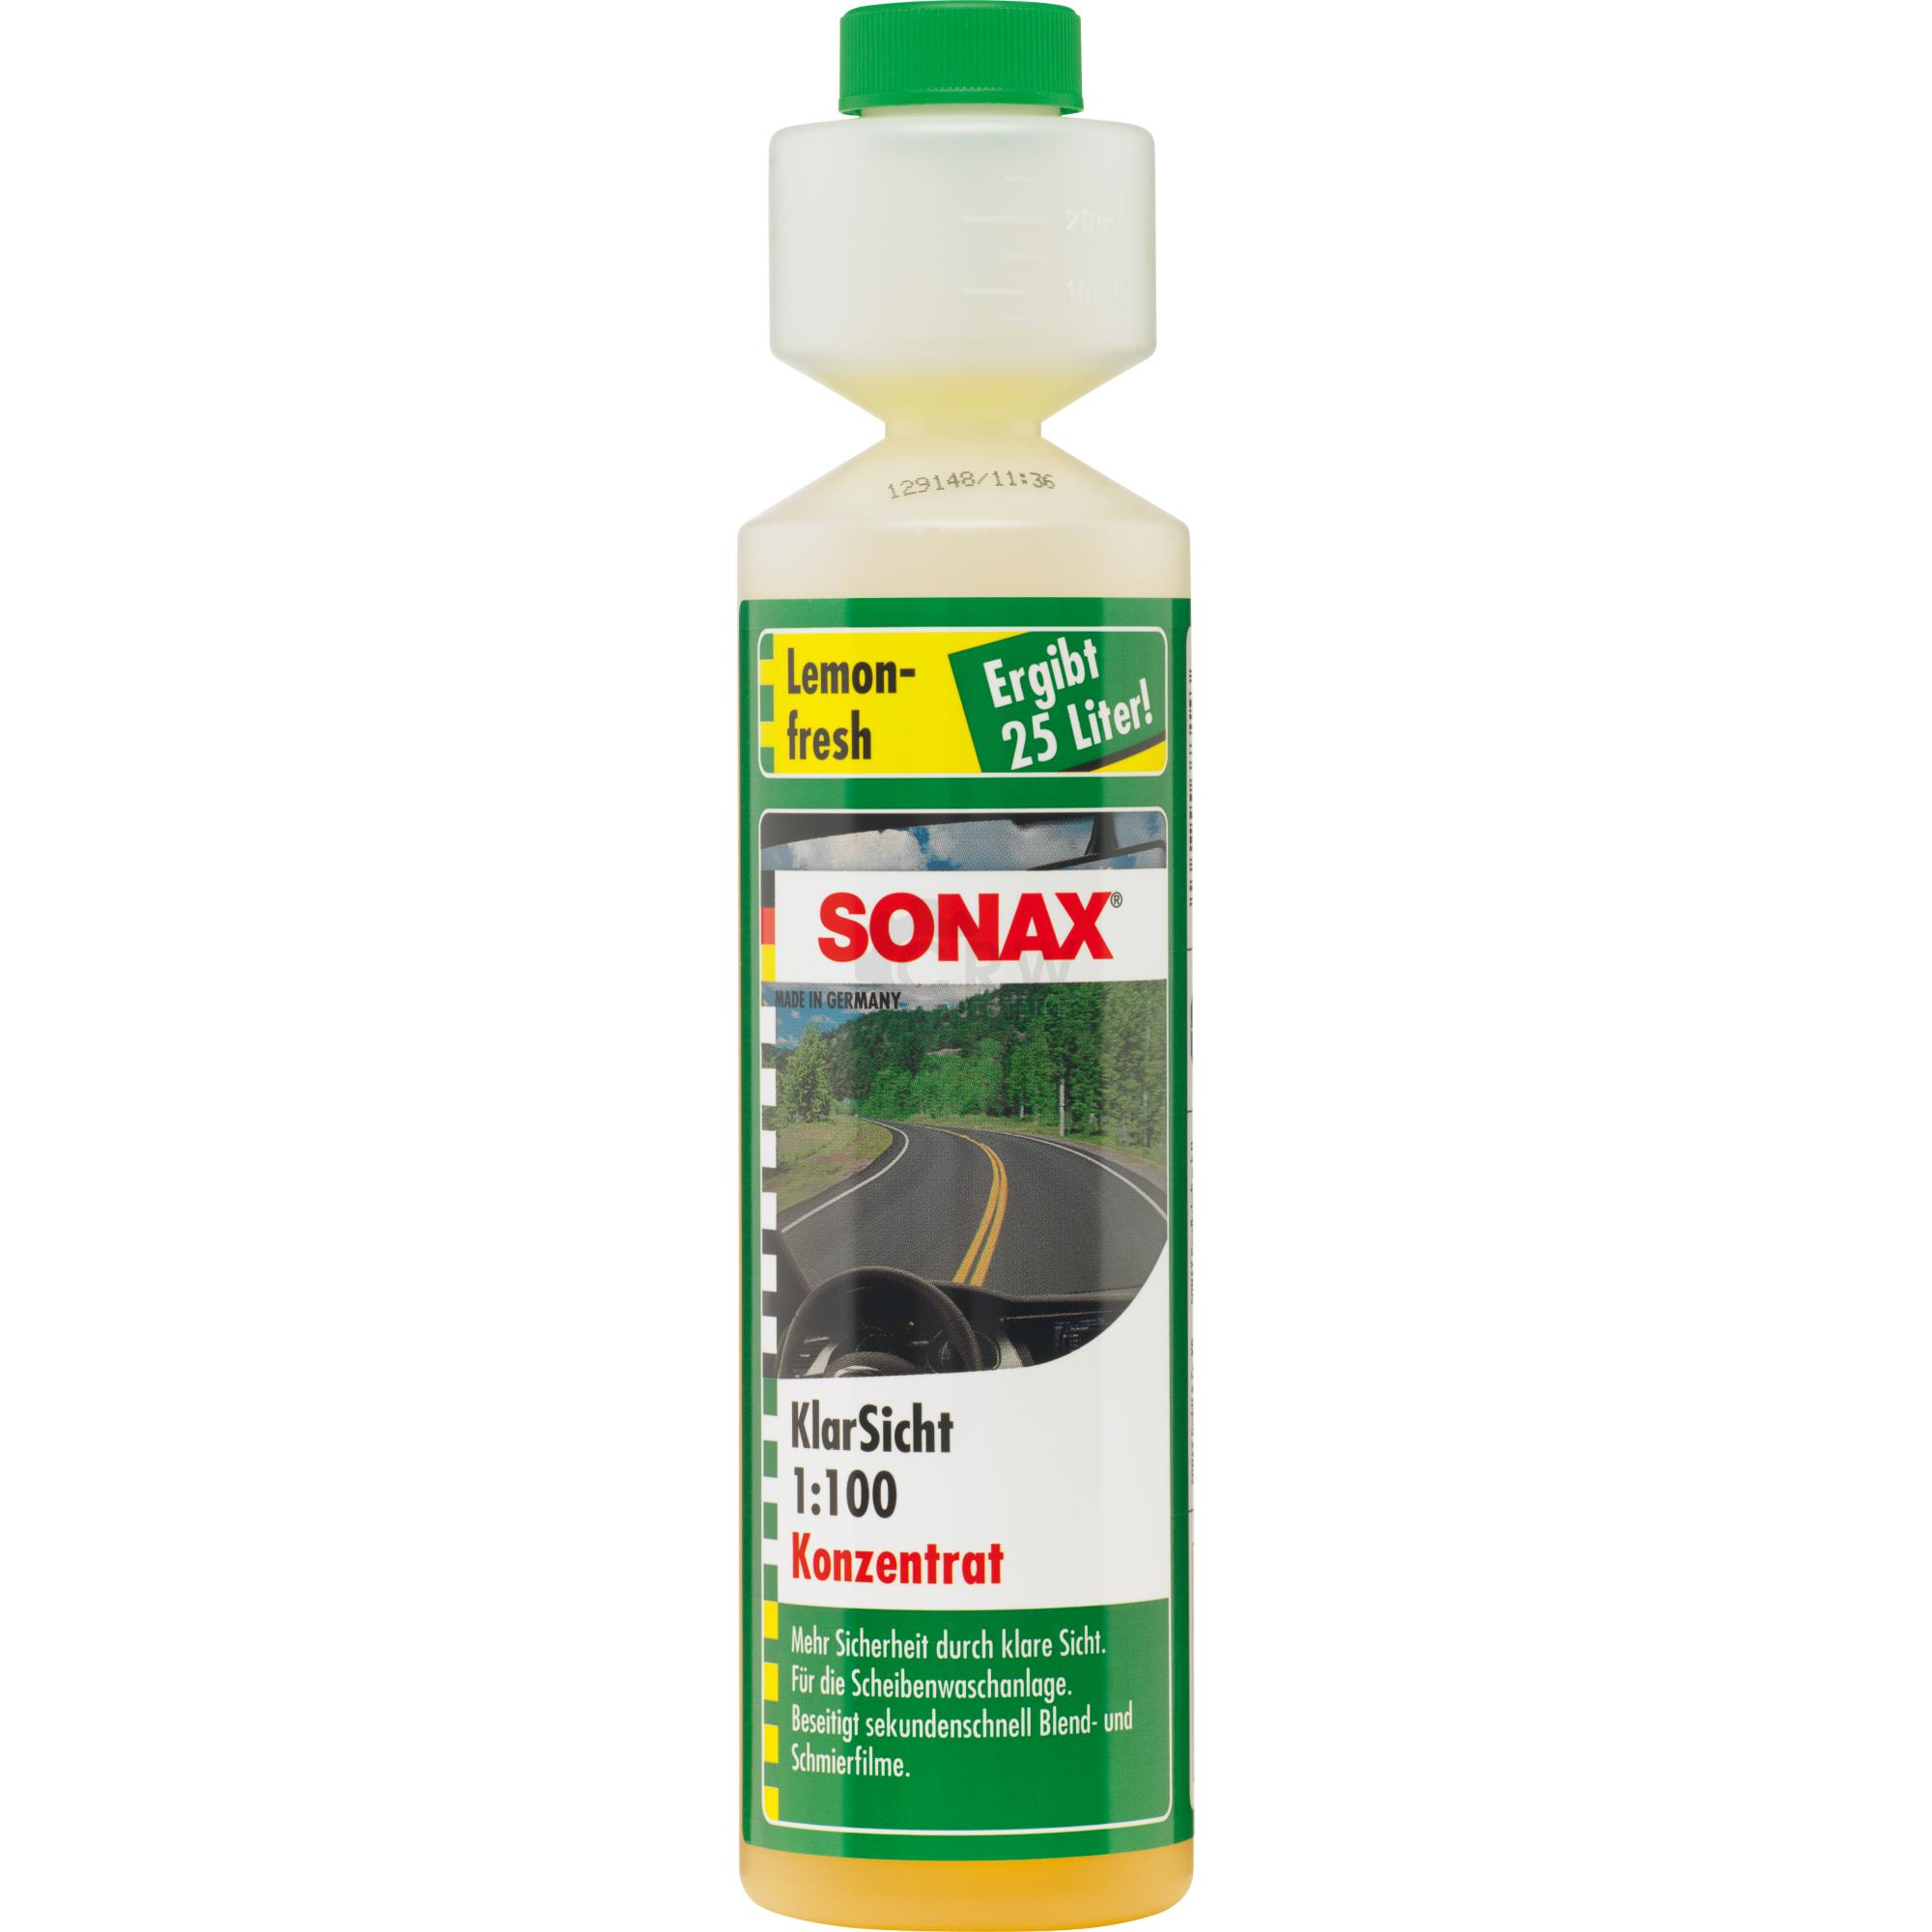 SONAX 03731410  KlarSicht 1:100 Konzentrat Lemon-fresh 250 ml